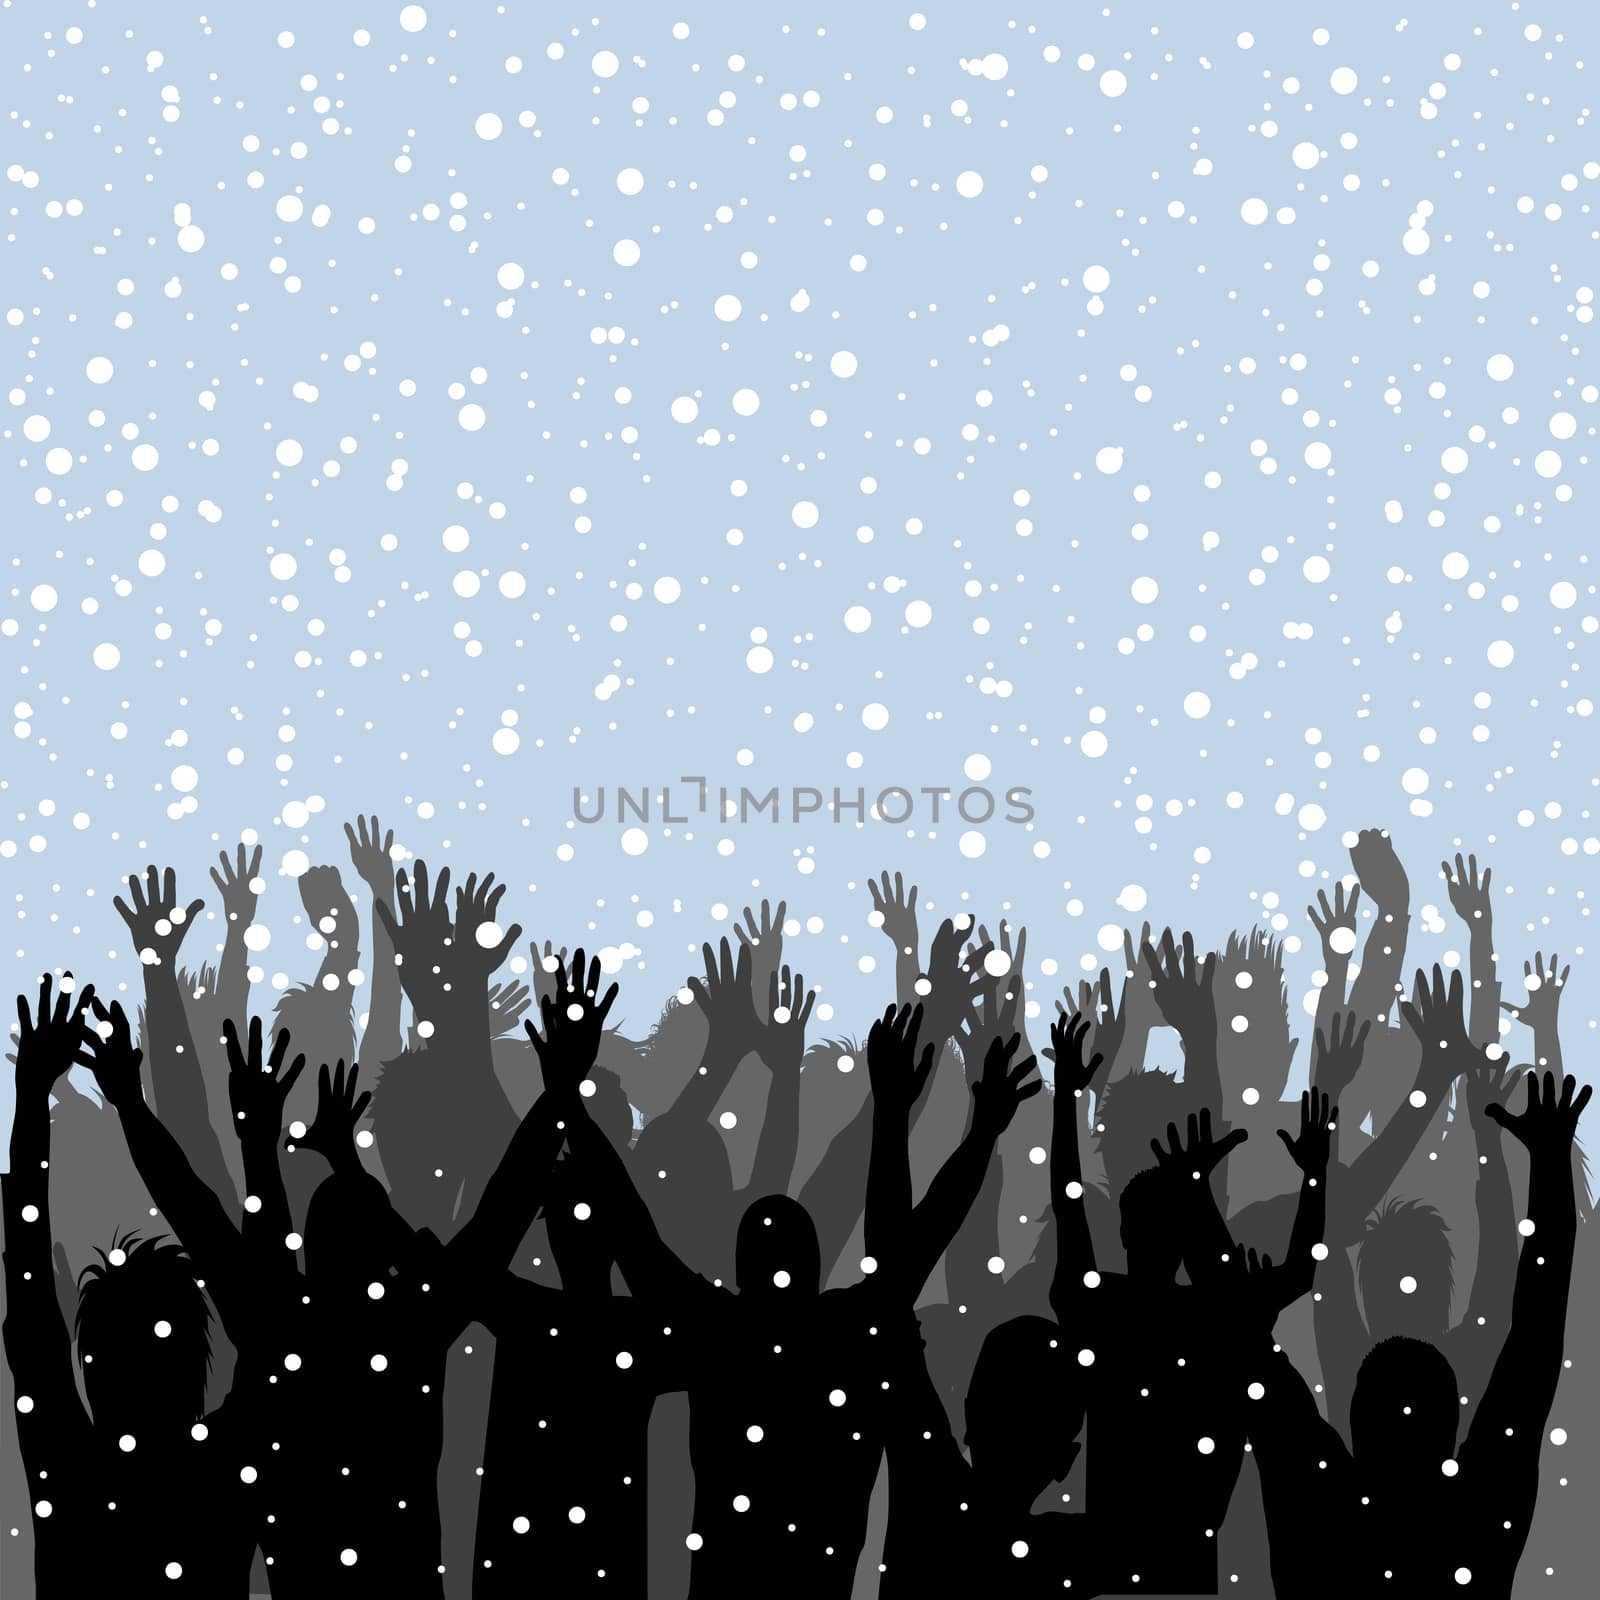 People silhouettes enjoying snow by hibrida13